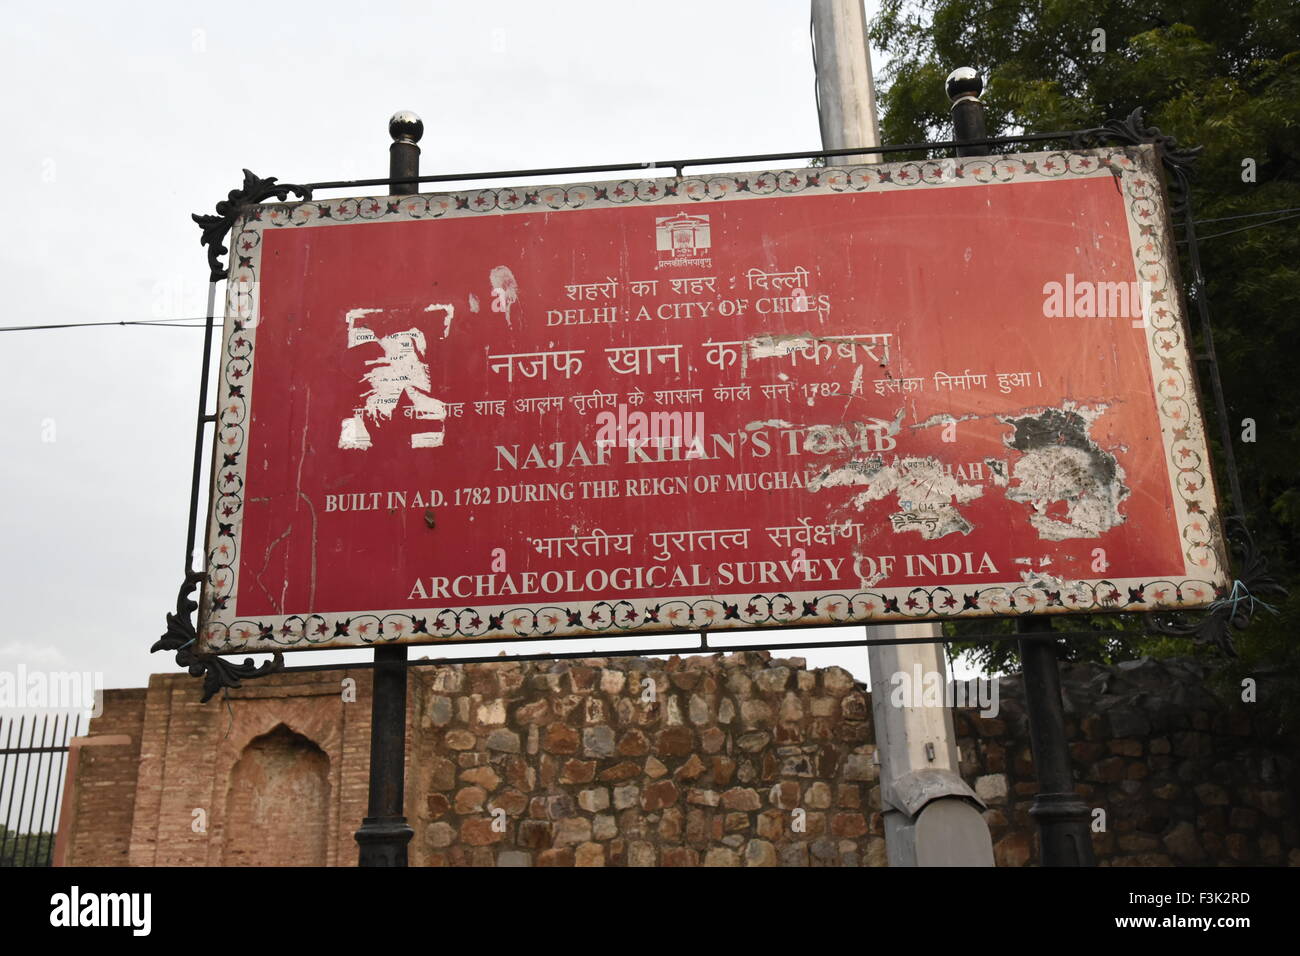 Najaf Khan Grab Rot Farbe Denkmal Informationstafel am Eingang von Archaeological Survey of India(ASI) Delhi, India, Asien Stockfoto